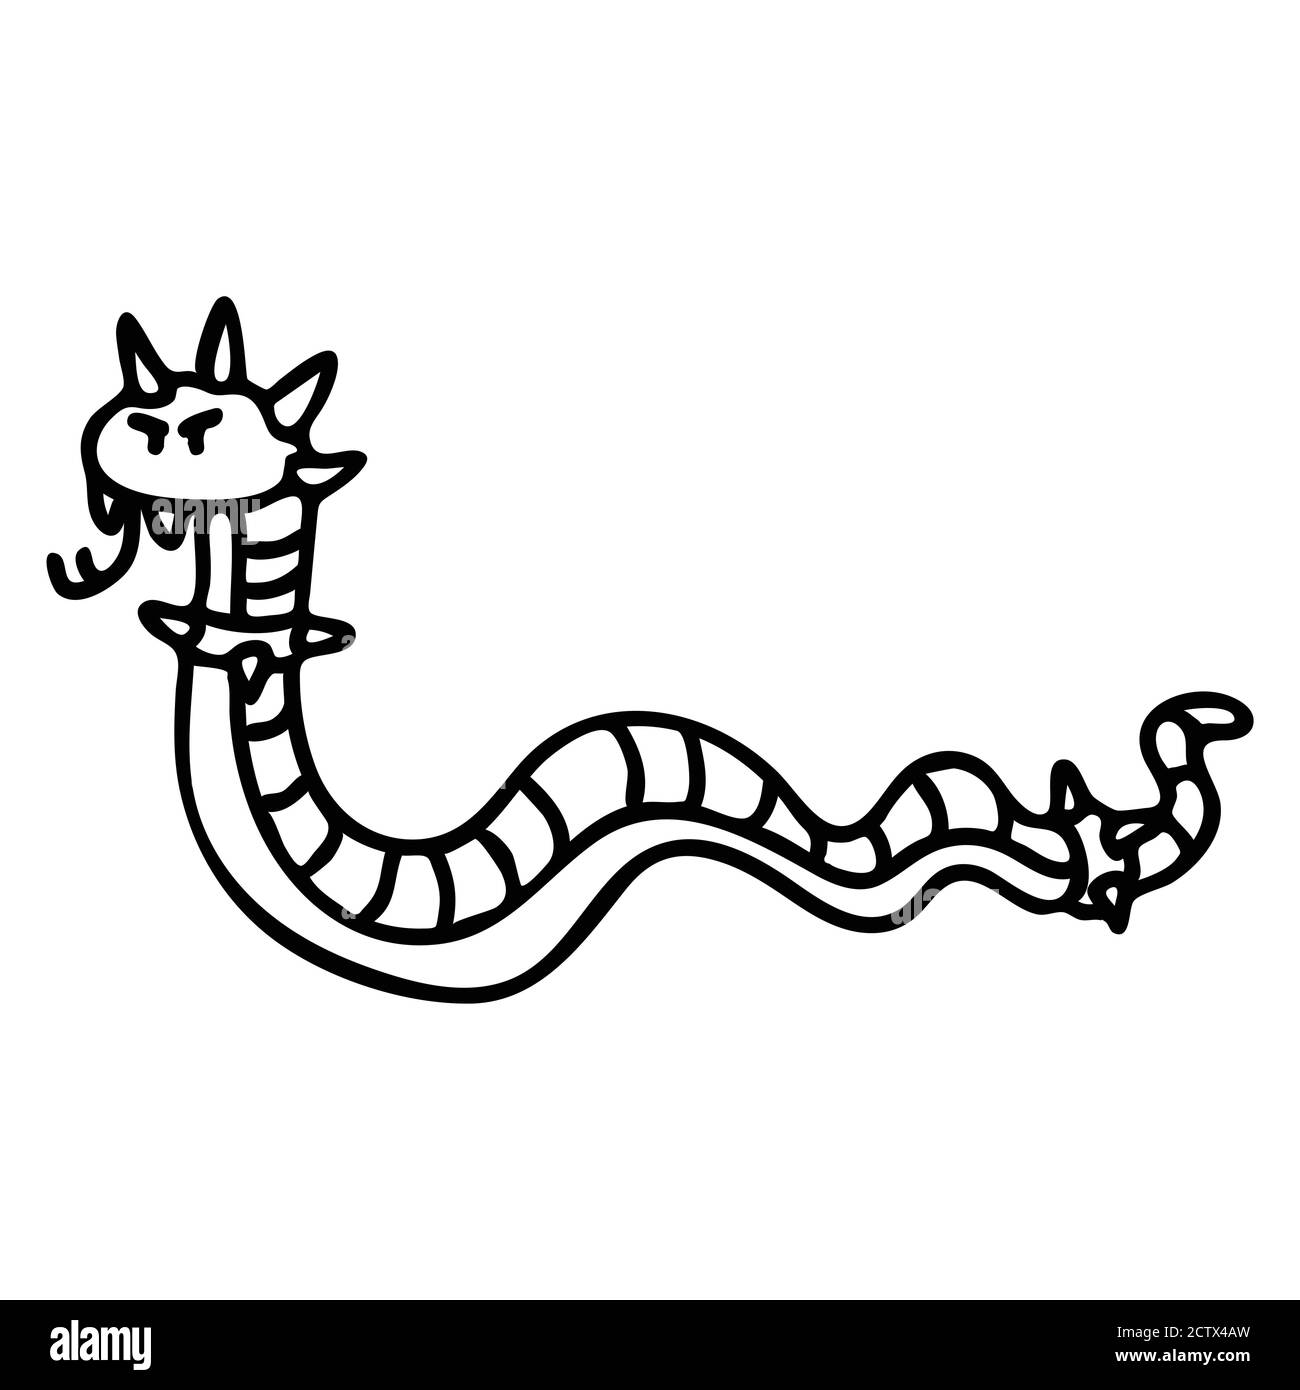 Punk rock snake with mohawk vector illustration clipart. Simple alternative  sticker. Kids emo rocker cute hand drawn cartoon animal motif Stock Vector  Image & Art - Alamy